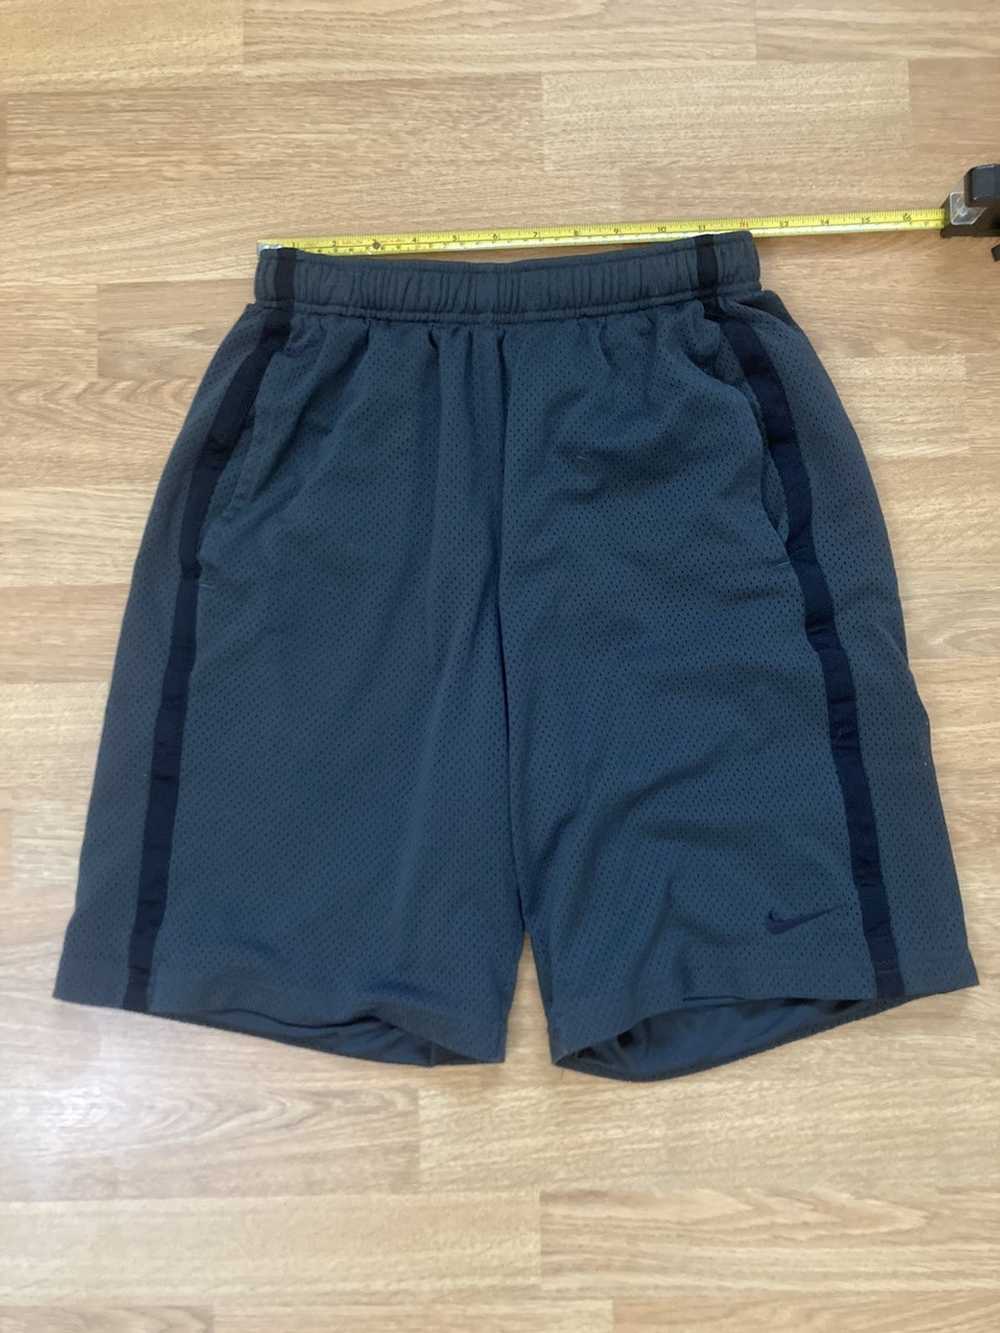 Nike Nike Shorts Adult Small Gray Active Training… - image 1